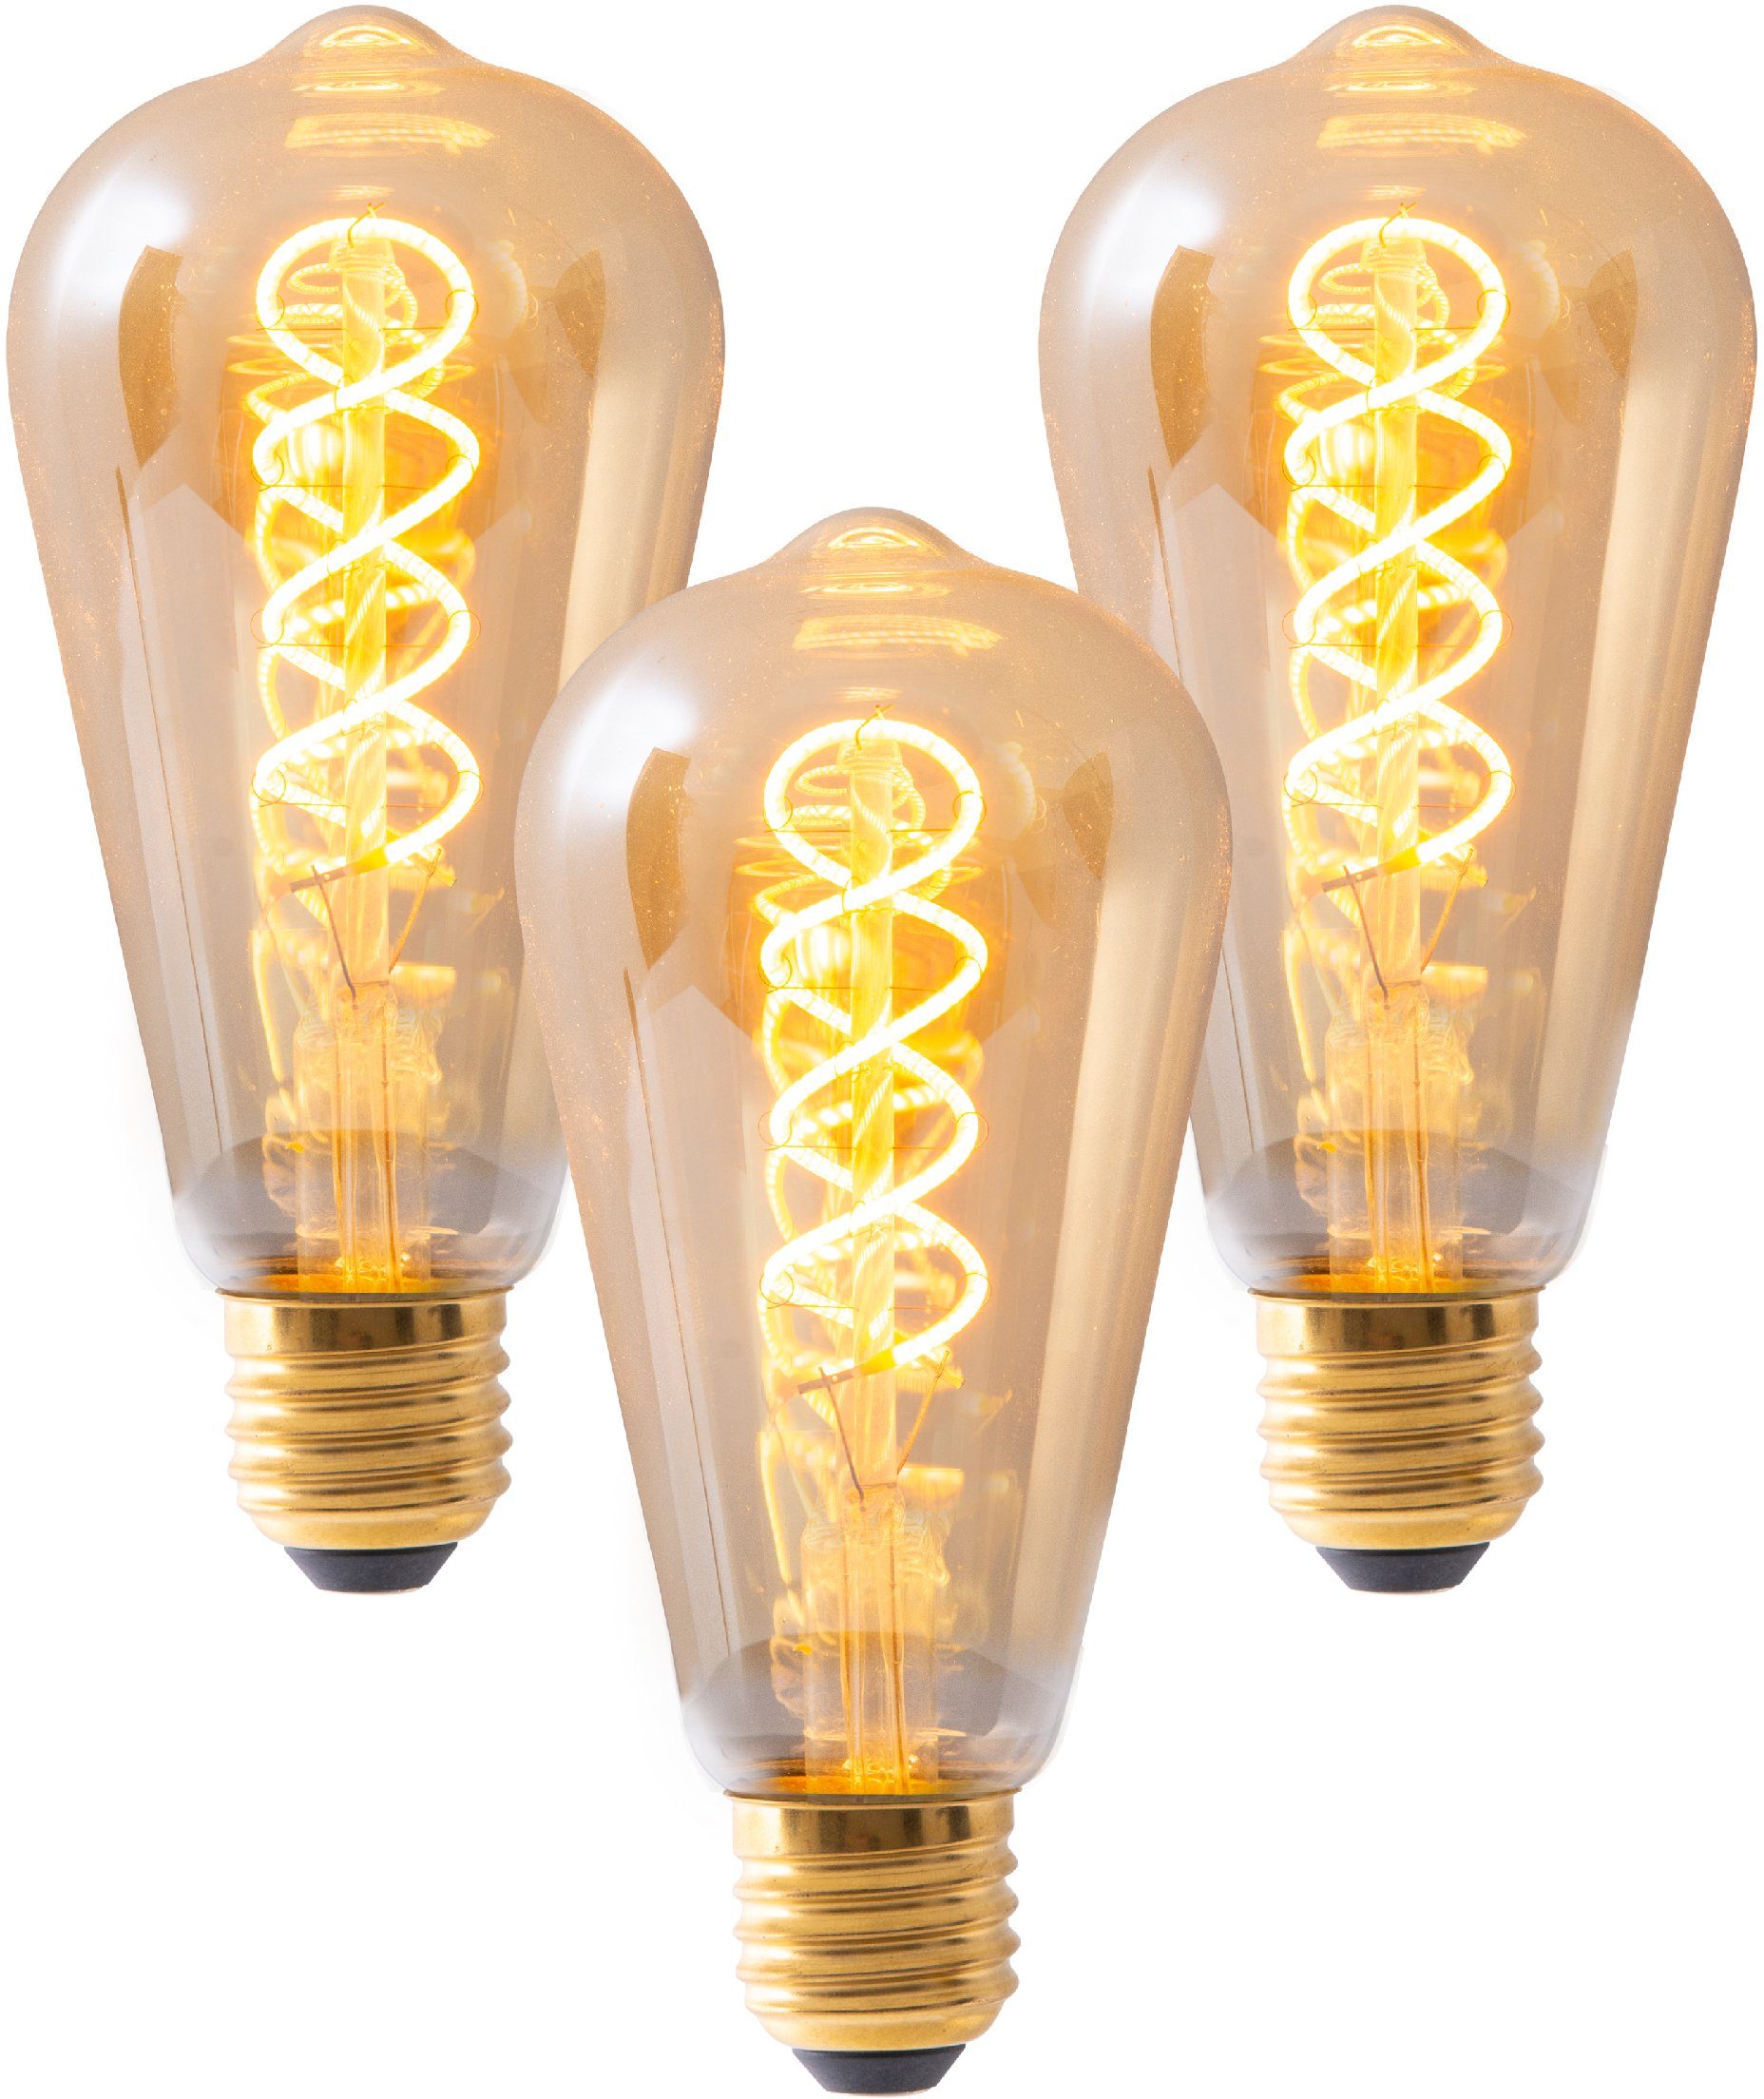 näve Dilly LED-Leuchtmittel, E27, 3 St., Warmweiß, Retro Leuchtmittel  Filament